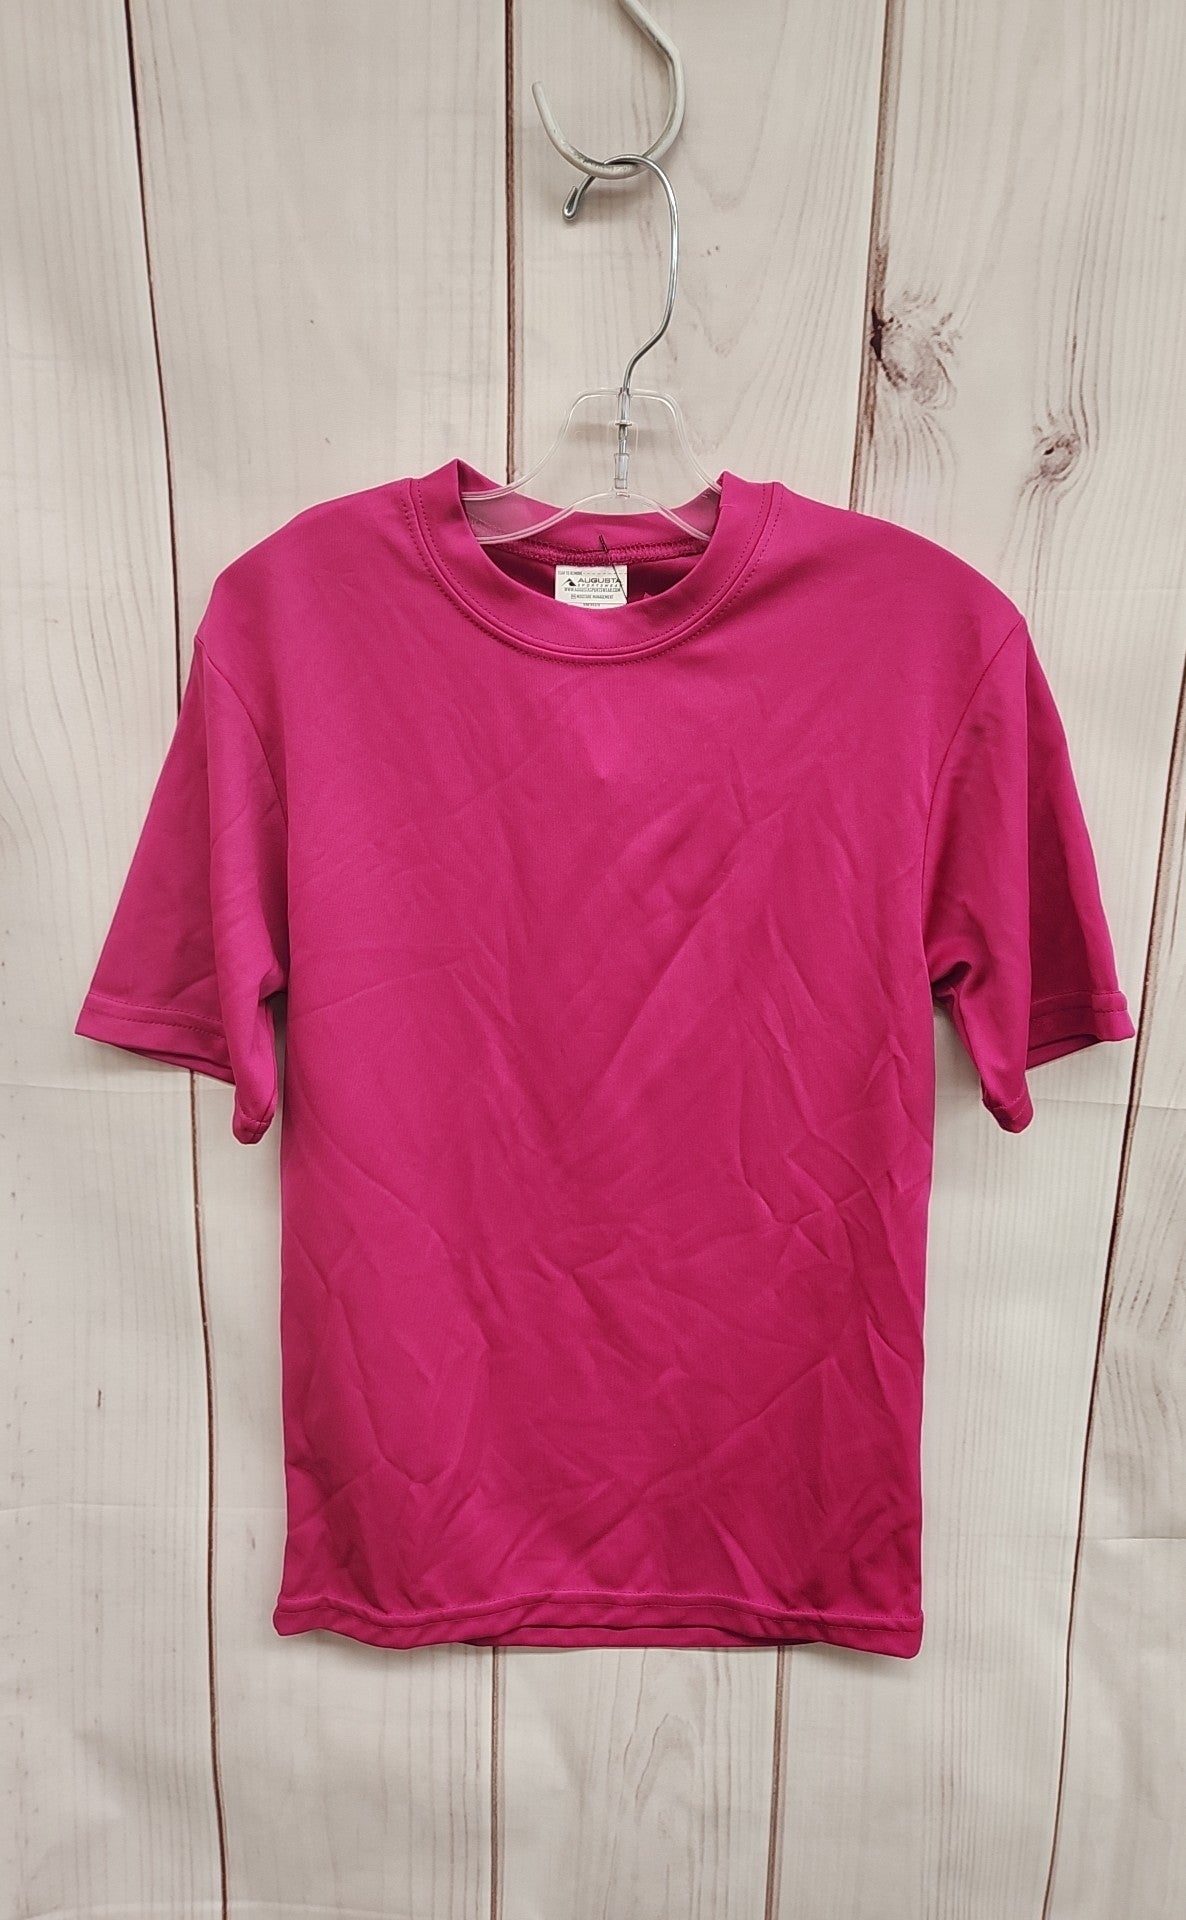 Girl's Size 8/10 Pink Shirt